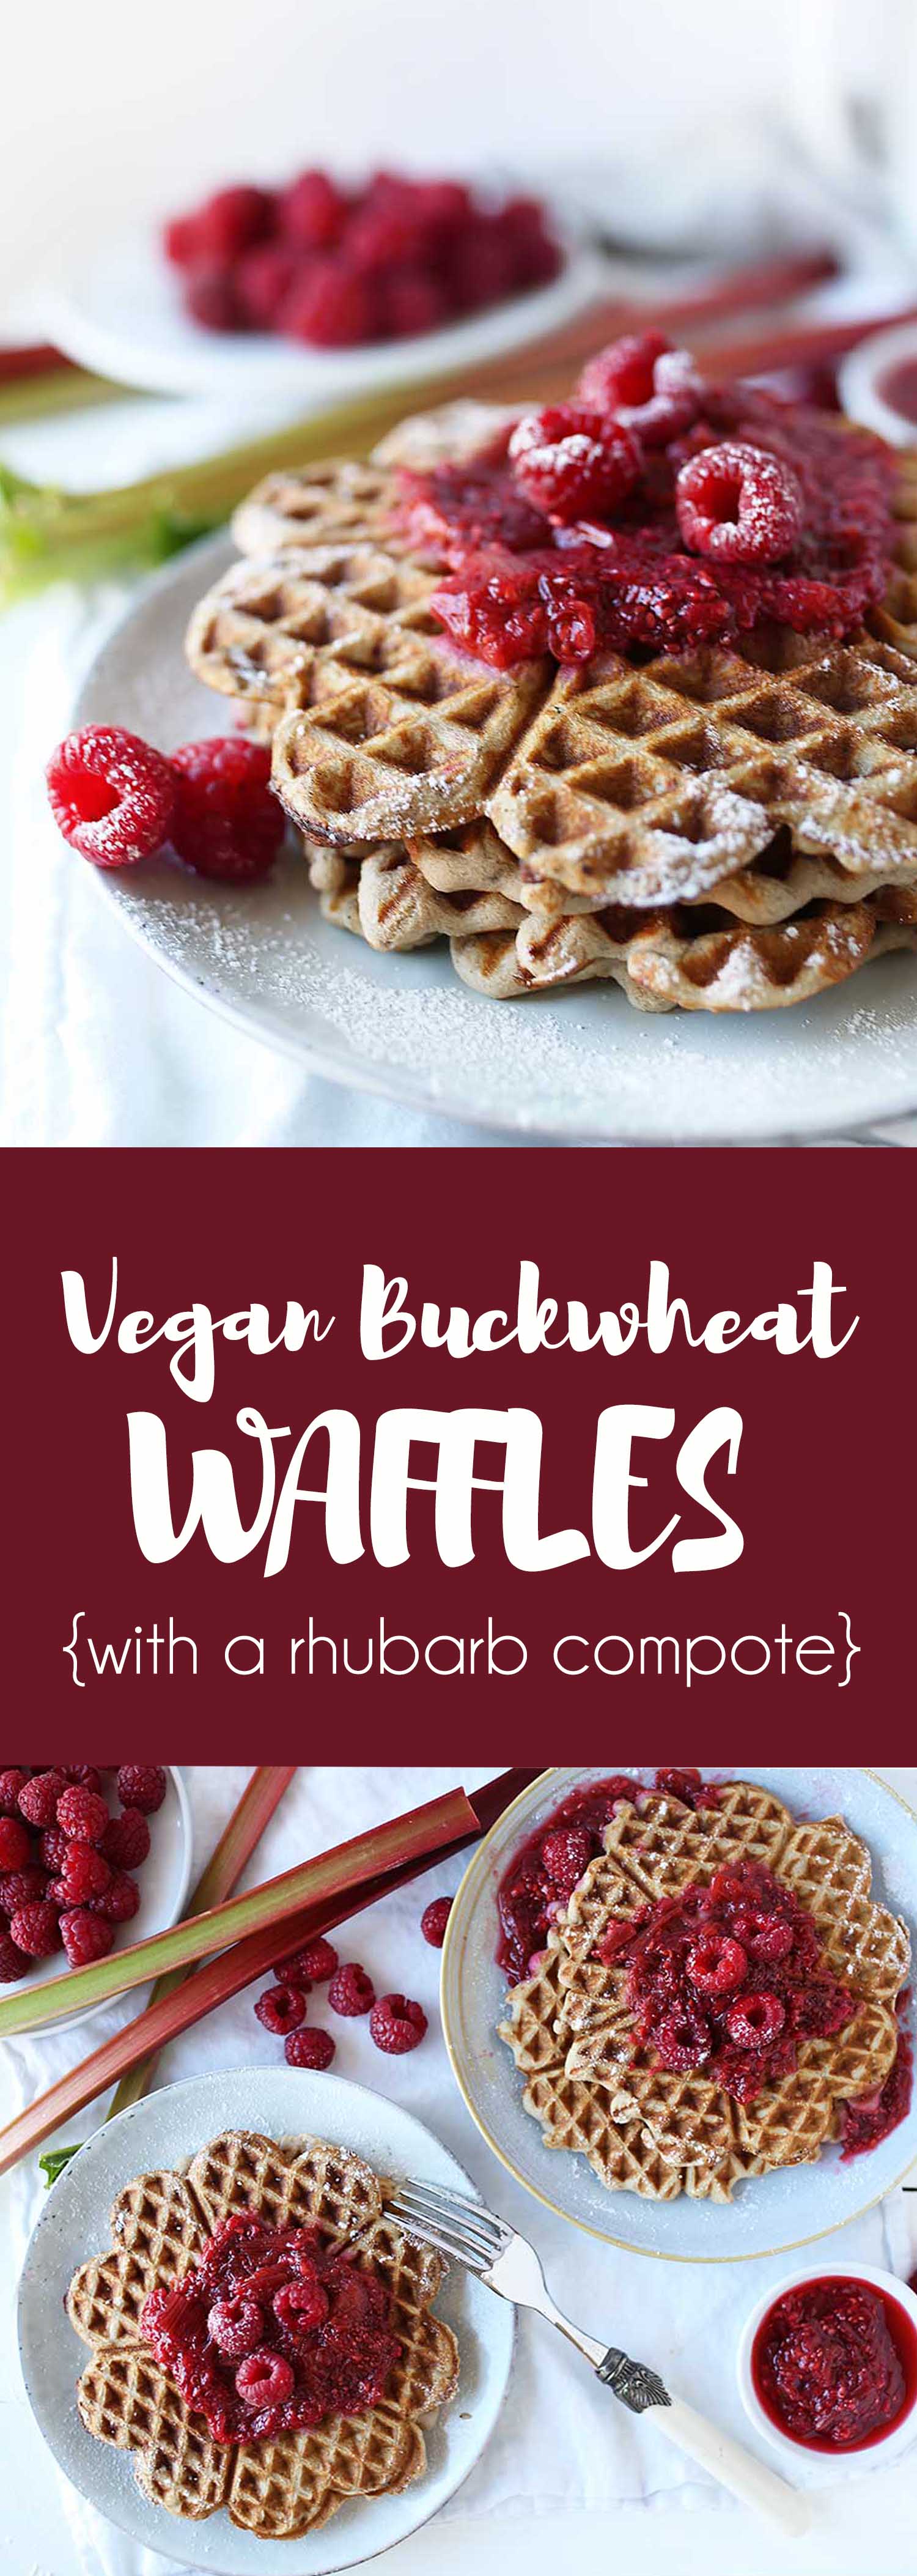 Vegan Buckwheat waffles with a rhubarb-raspberry compote